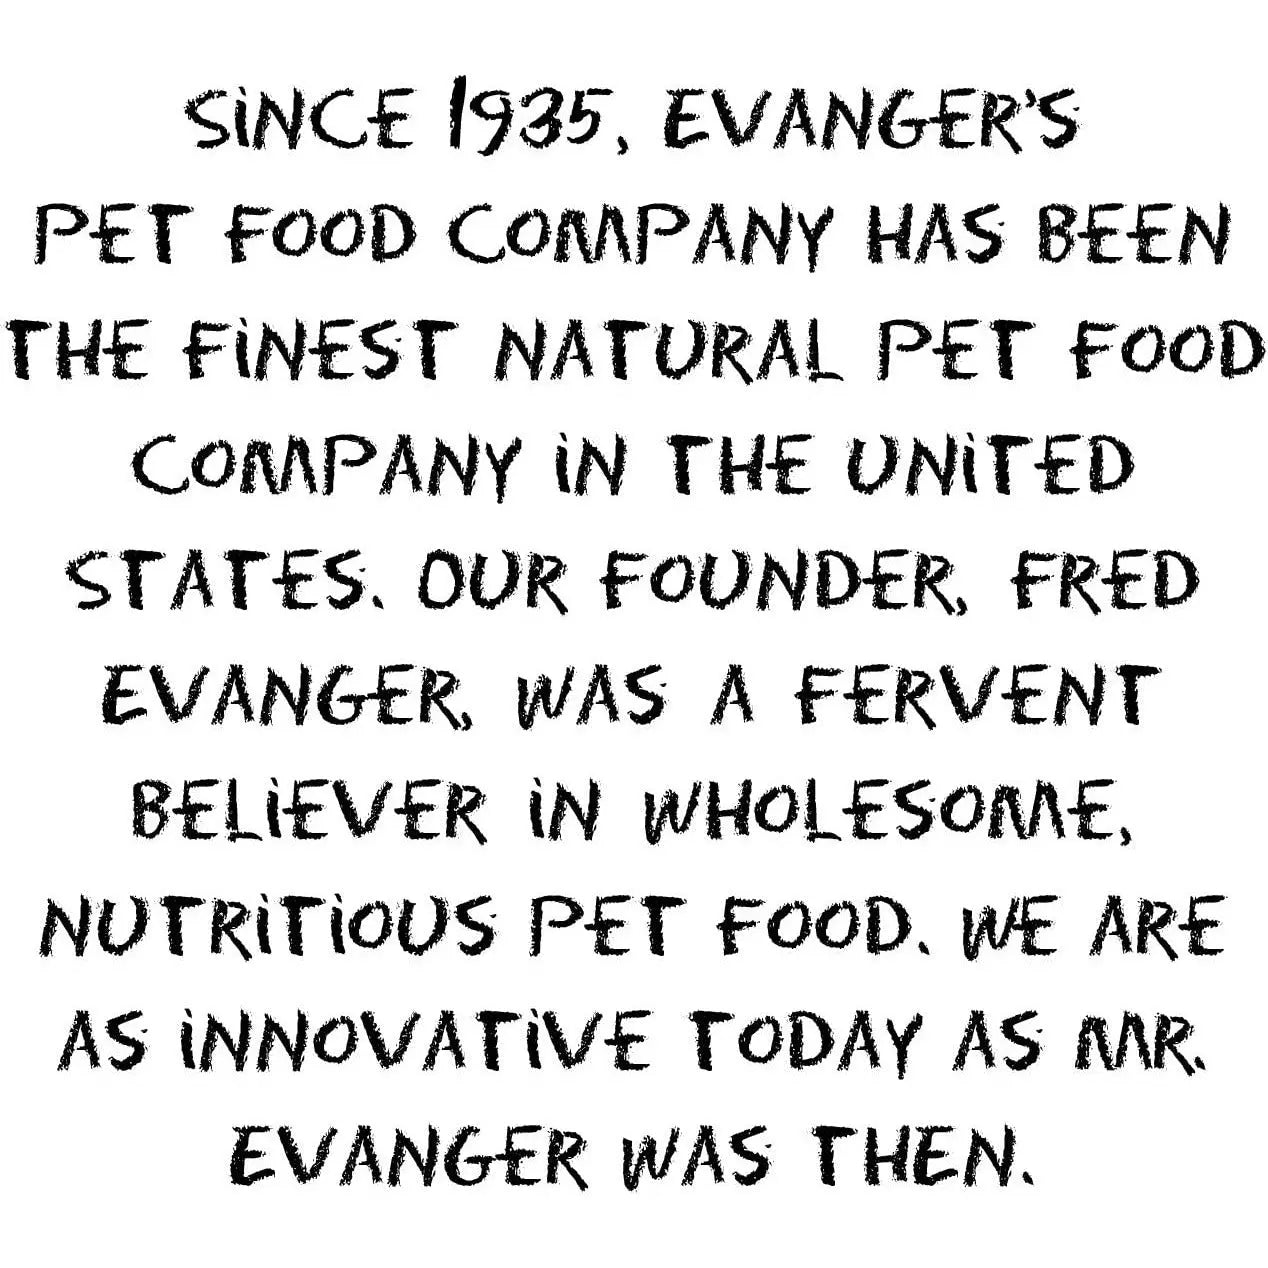 Evanger's Grain-Free Pork Canned Dog & Cat Food case of 24 Evanger's